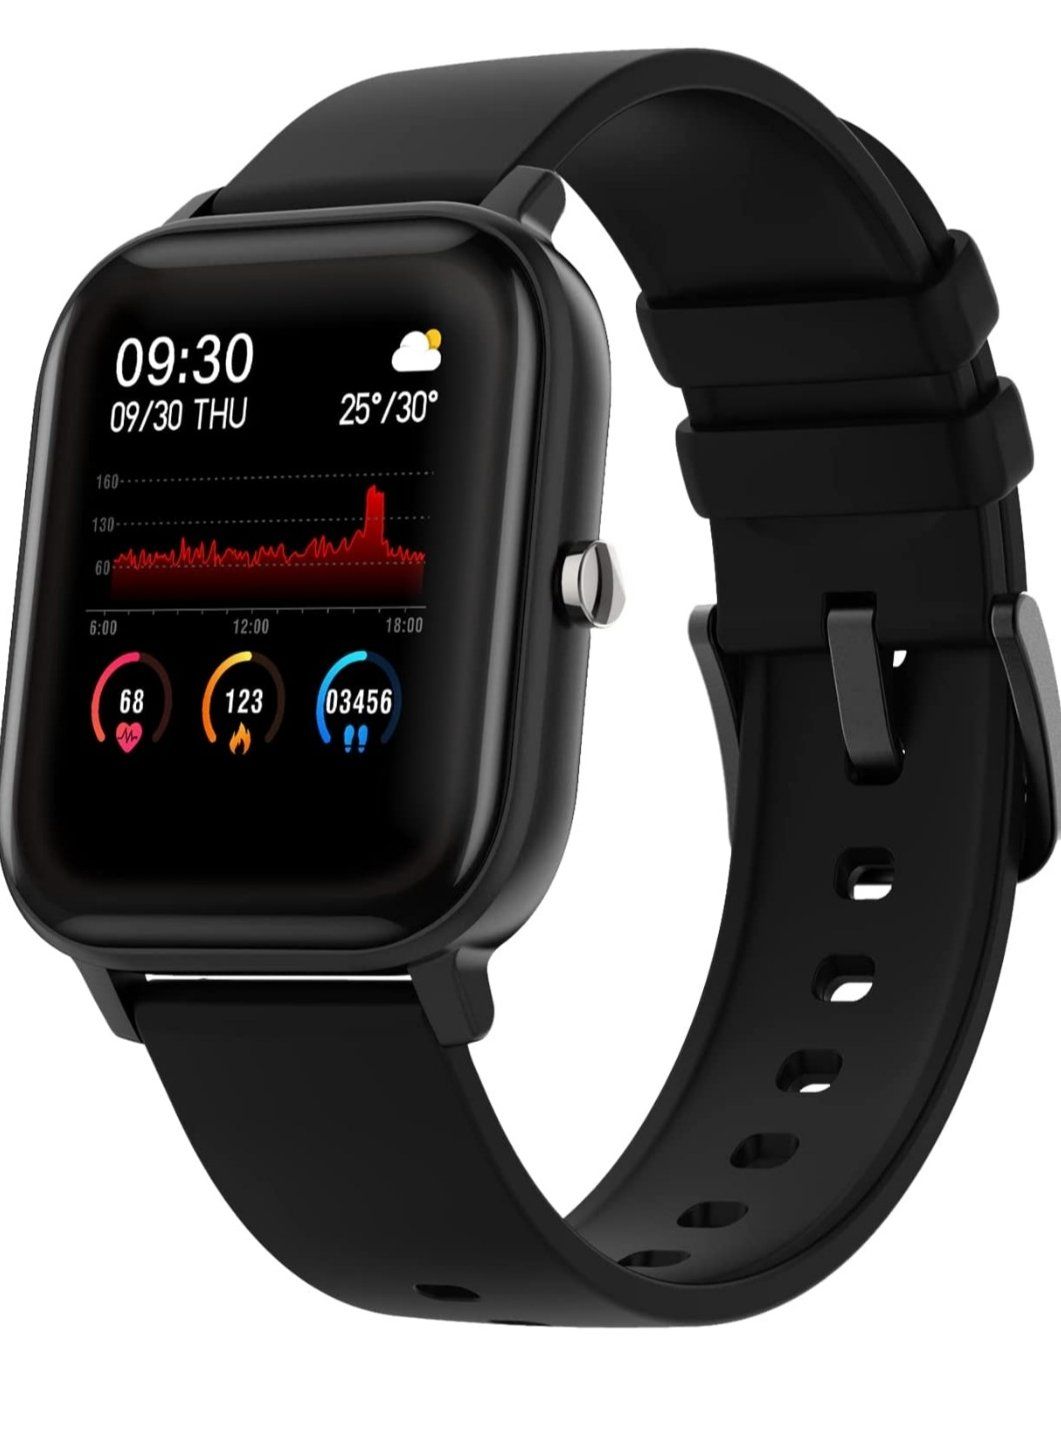 Apple Watch App: Displaying The Heart Rate | by Adam Eri | iOS App  Development | Medium